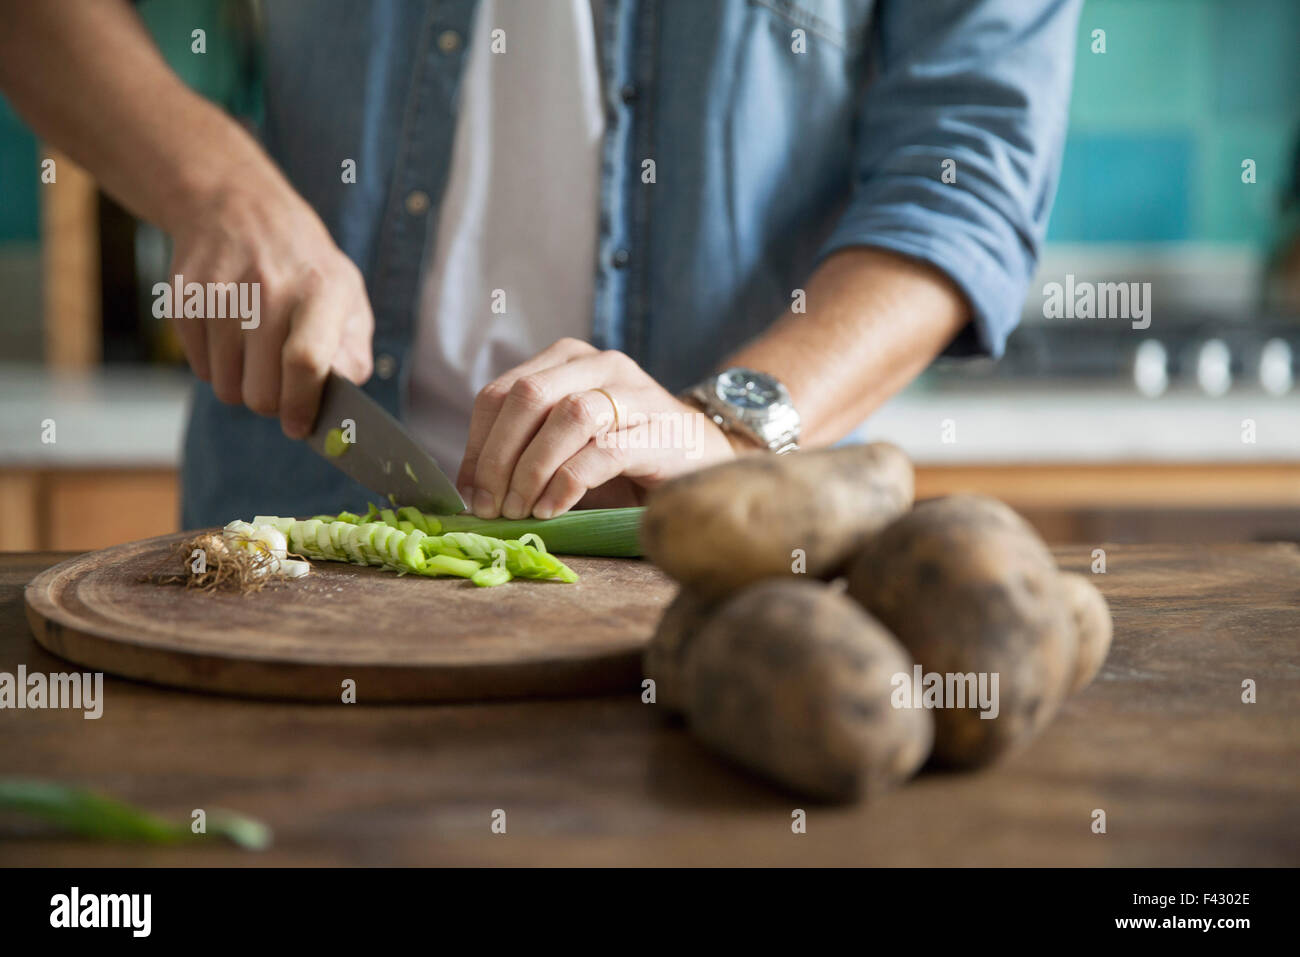 Man cutting spring onion in kitchen Stock Photo